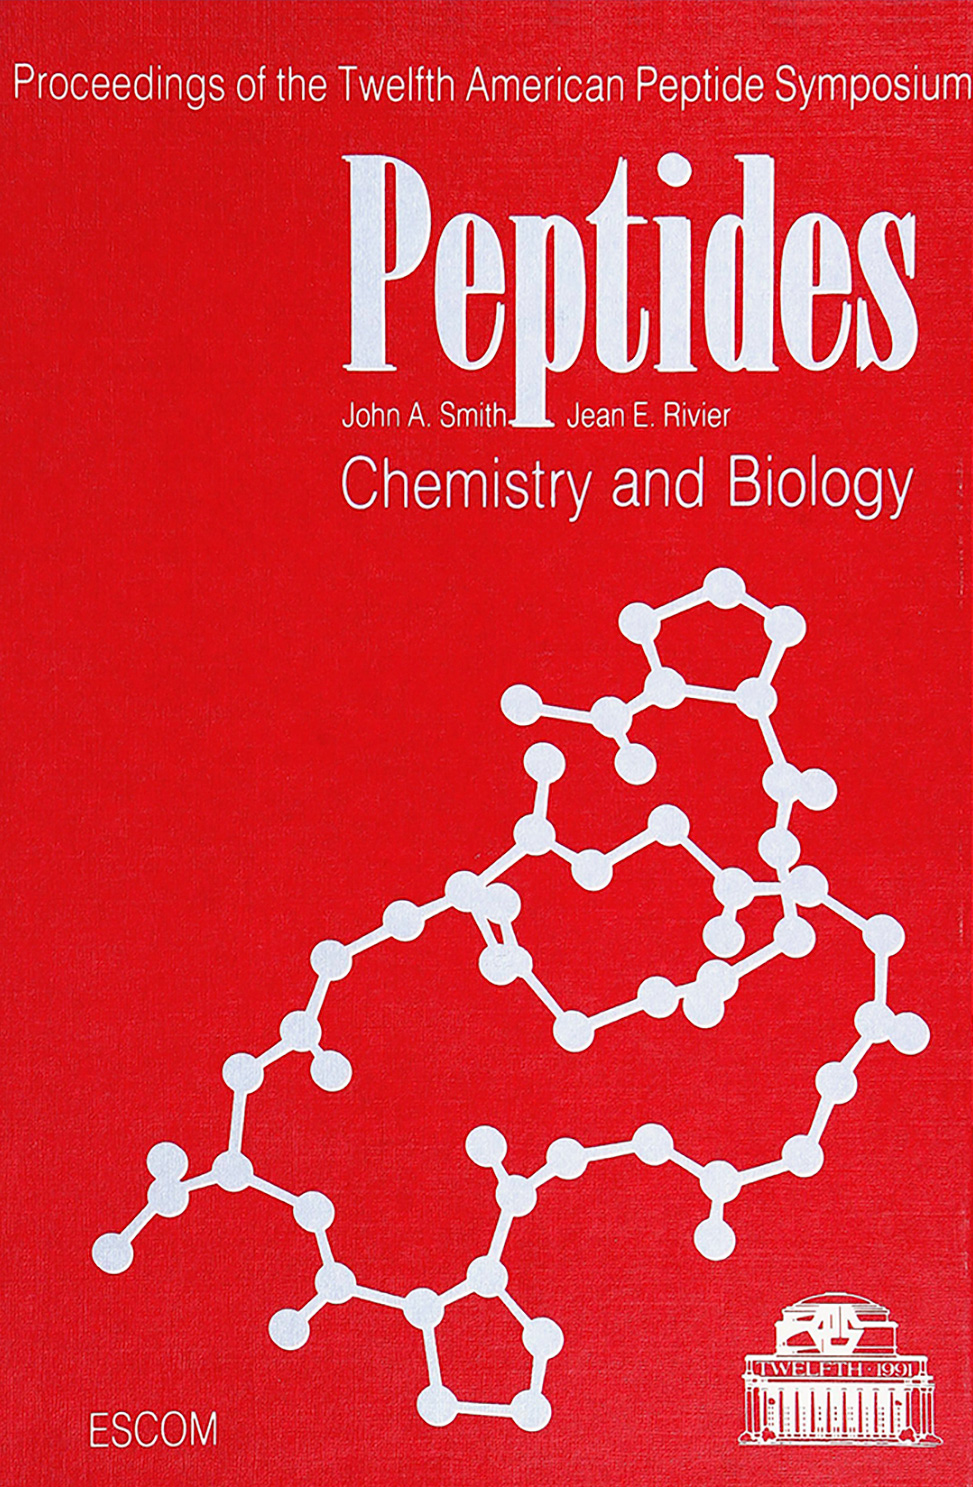 1991 Proceedings Cover